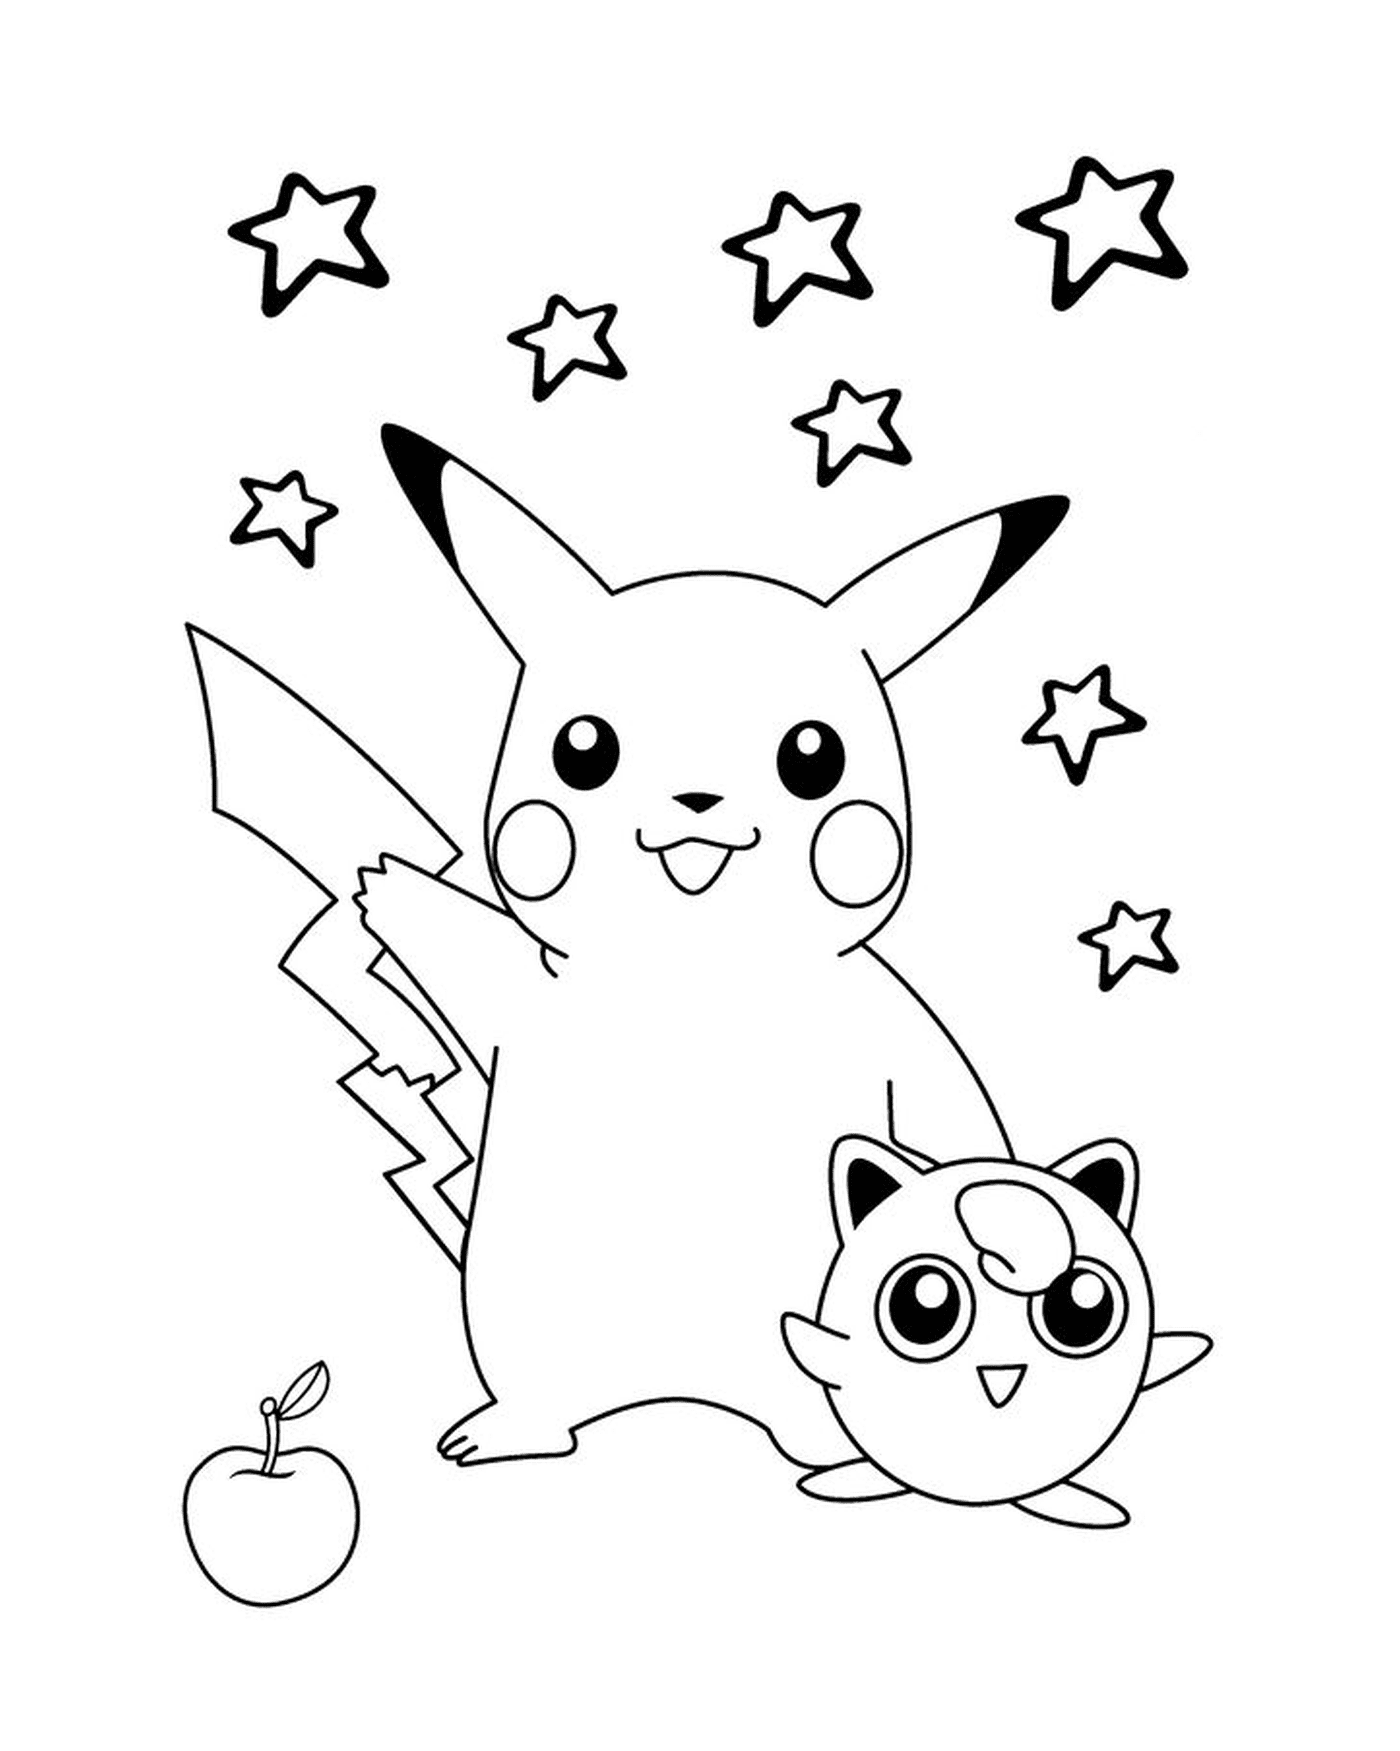  Pikachu and a hug cat 